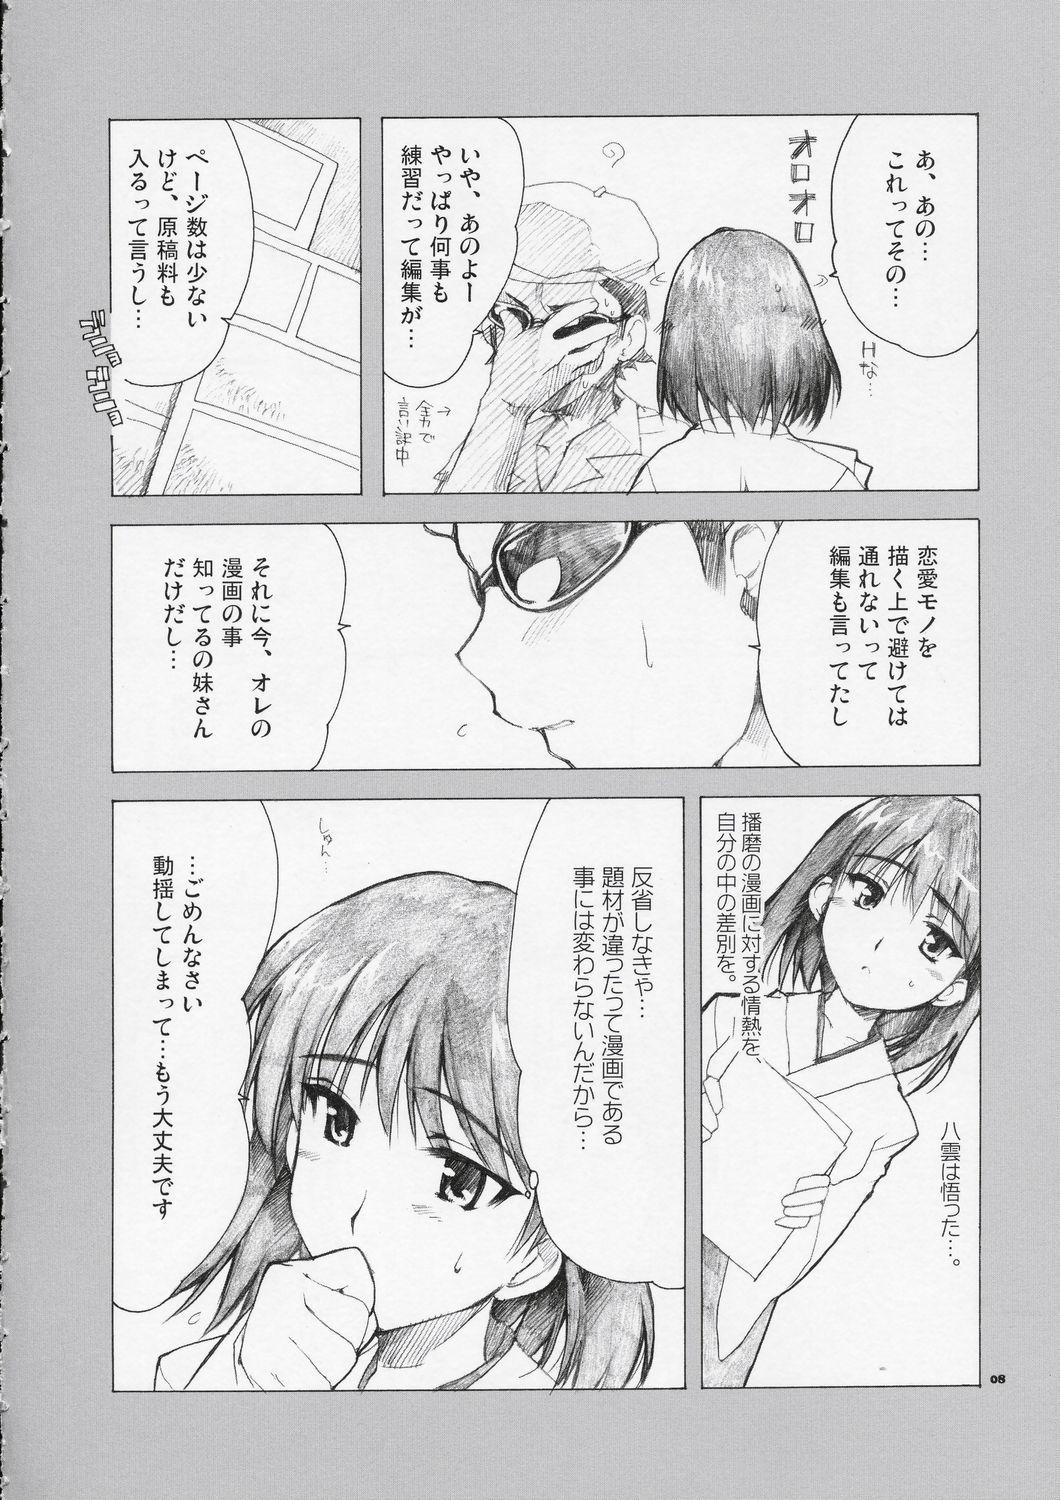 Bear Welcome to Cosplay Cafe Yakumo Jinja - School rumble 8teen - Page 7